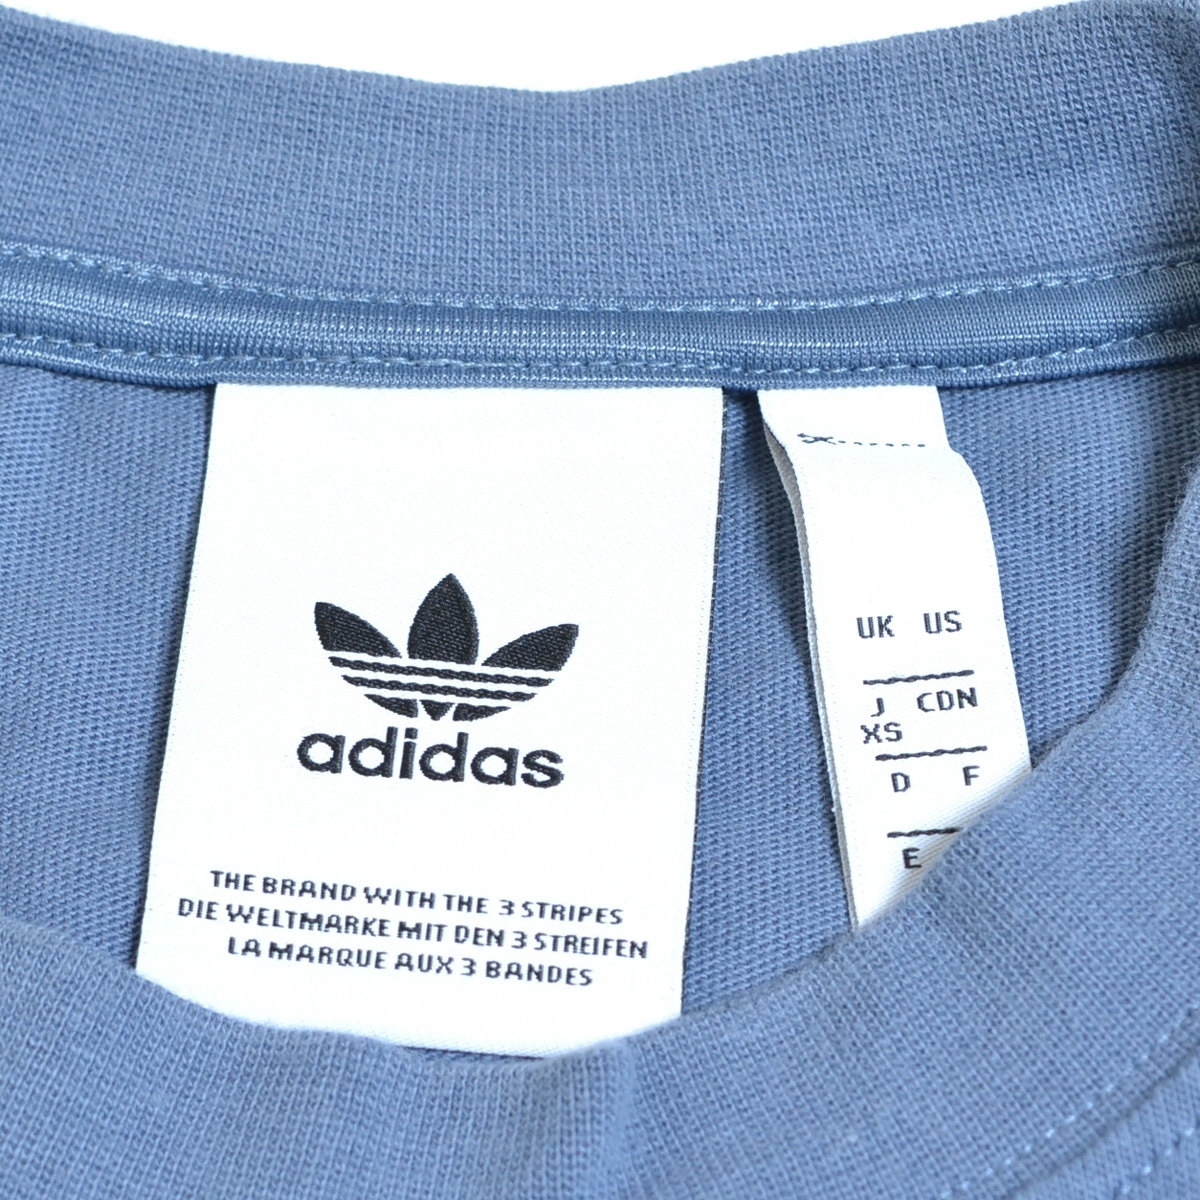 0452379 adidas Originals Adidas Originals * T-shirt short sleeves NOVA TEE CE4841 size XS men's blue 